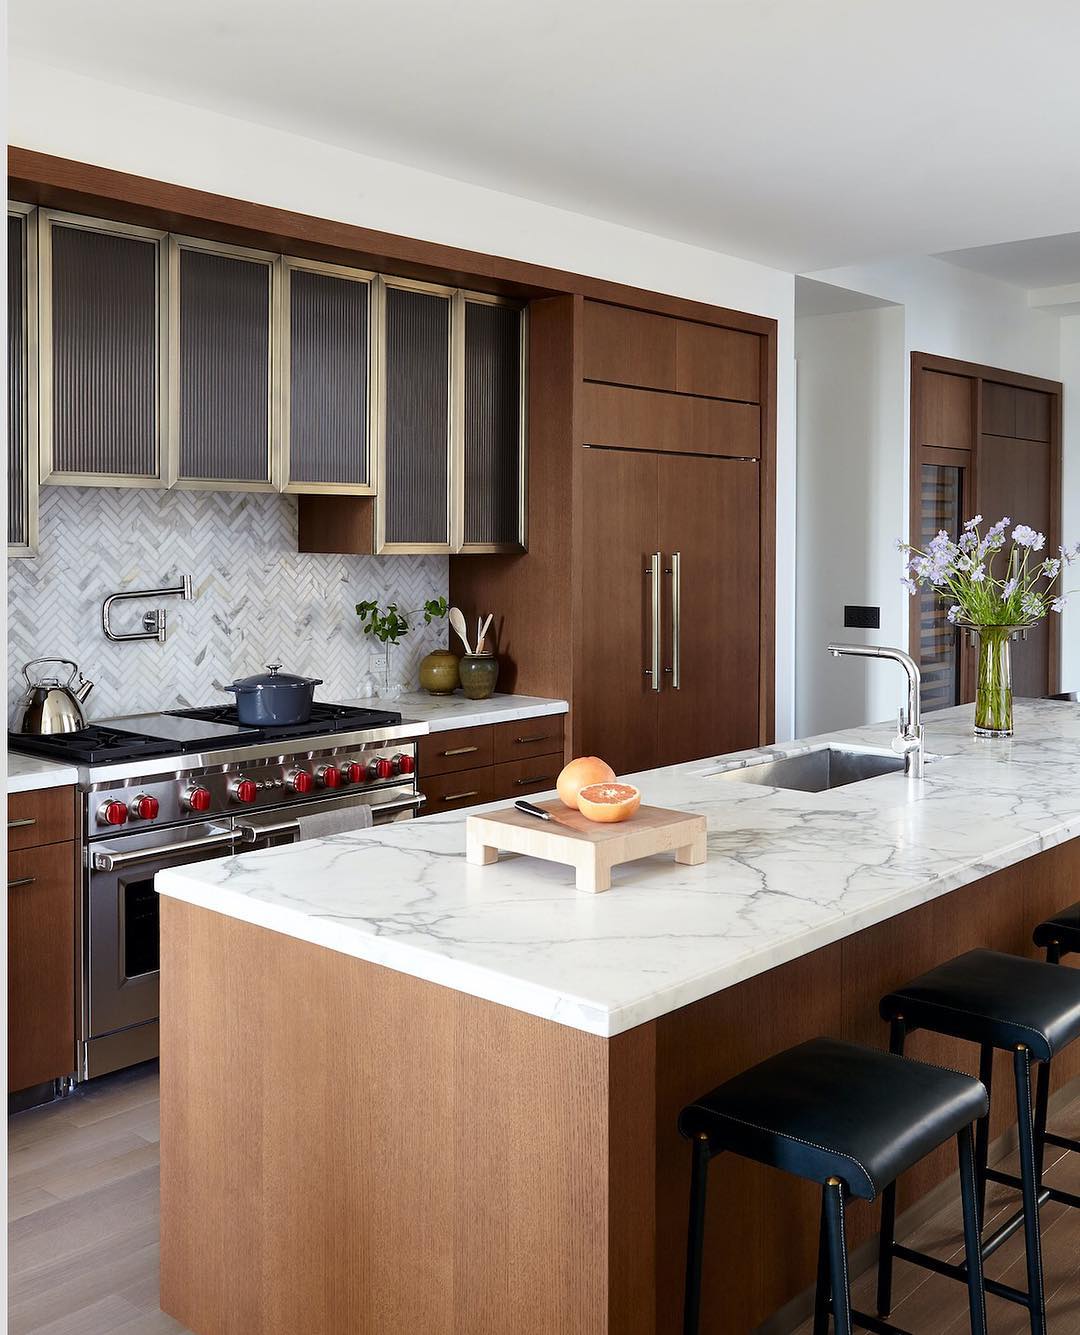 White marble and wood kitchens – Herringbone marble backsplash, dark wood kitchen island designed by Alyssa Kapito